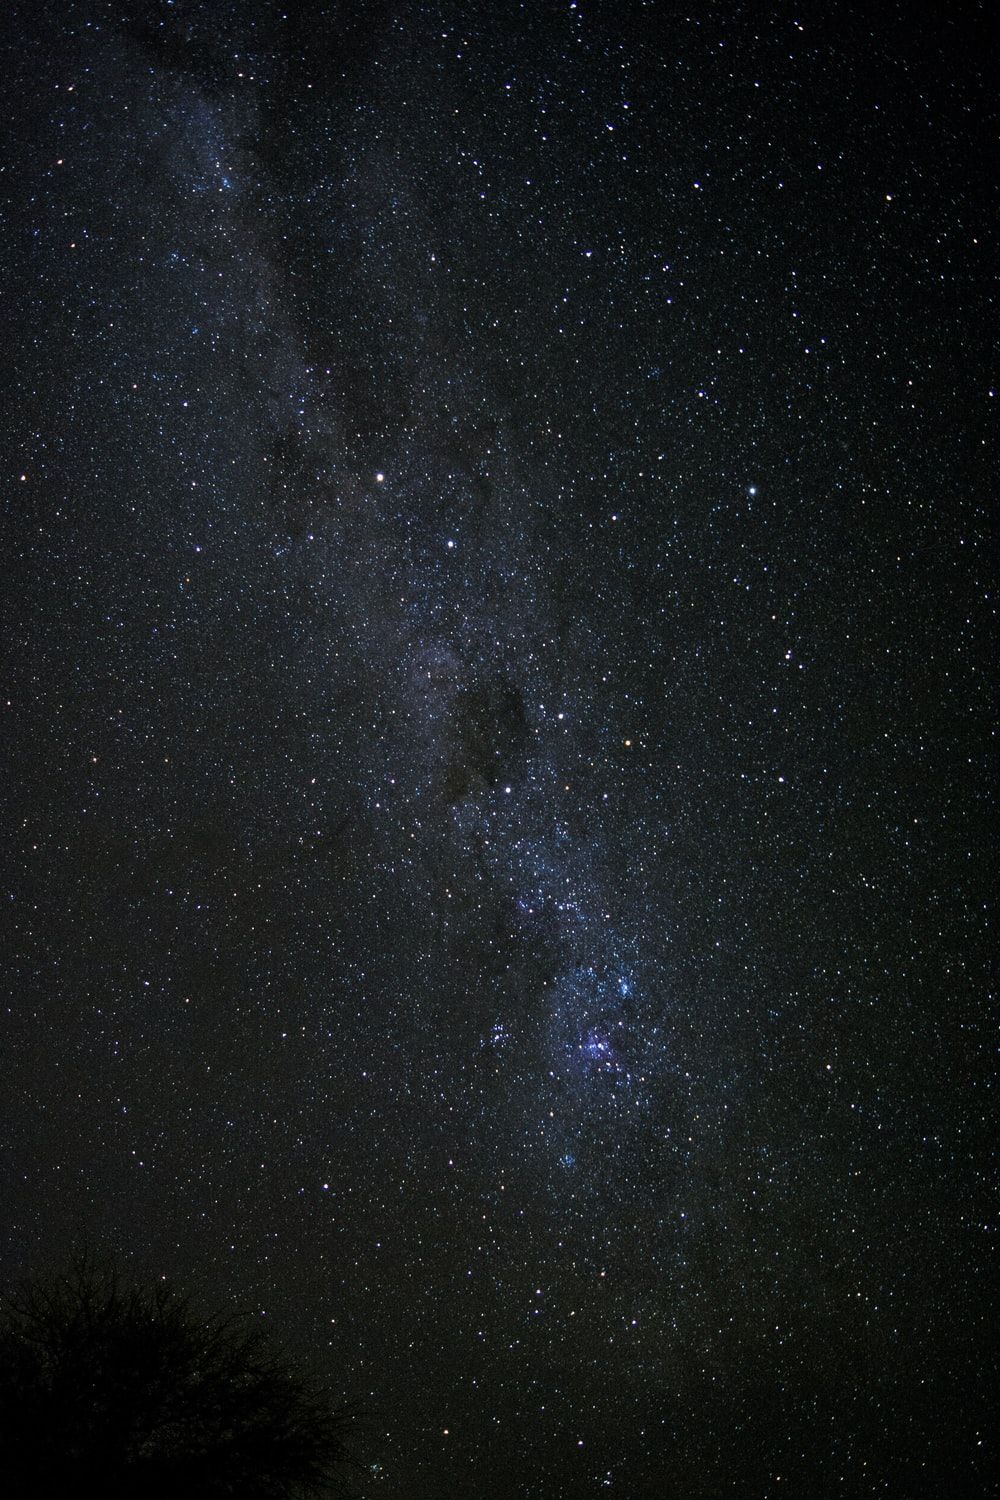 Nebula Picture [HQ]. Download Free Image